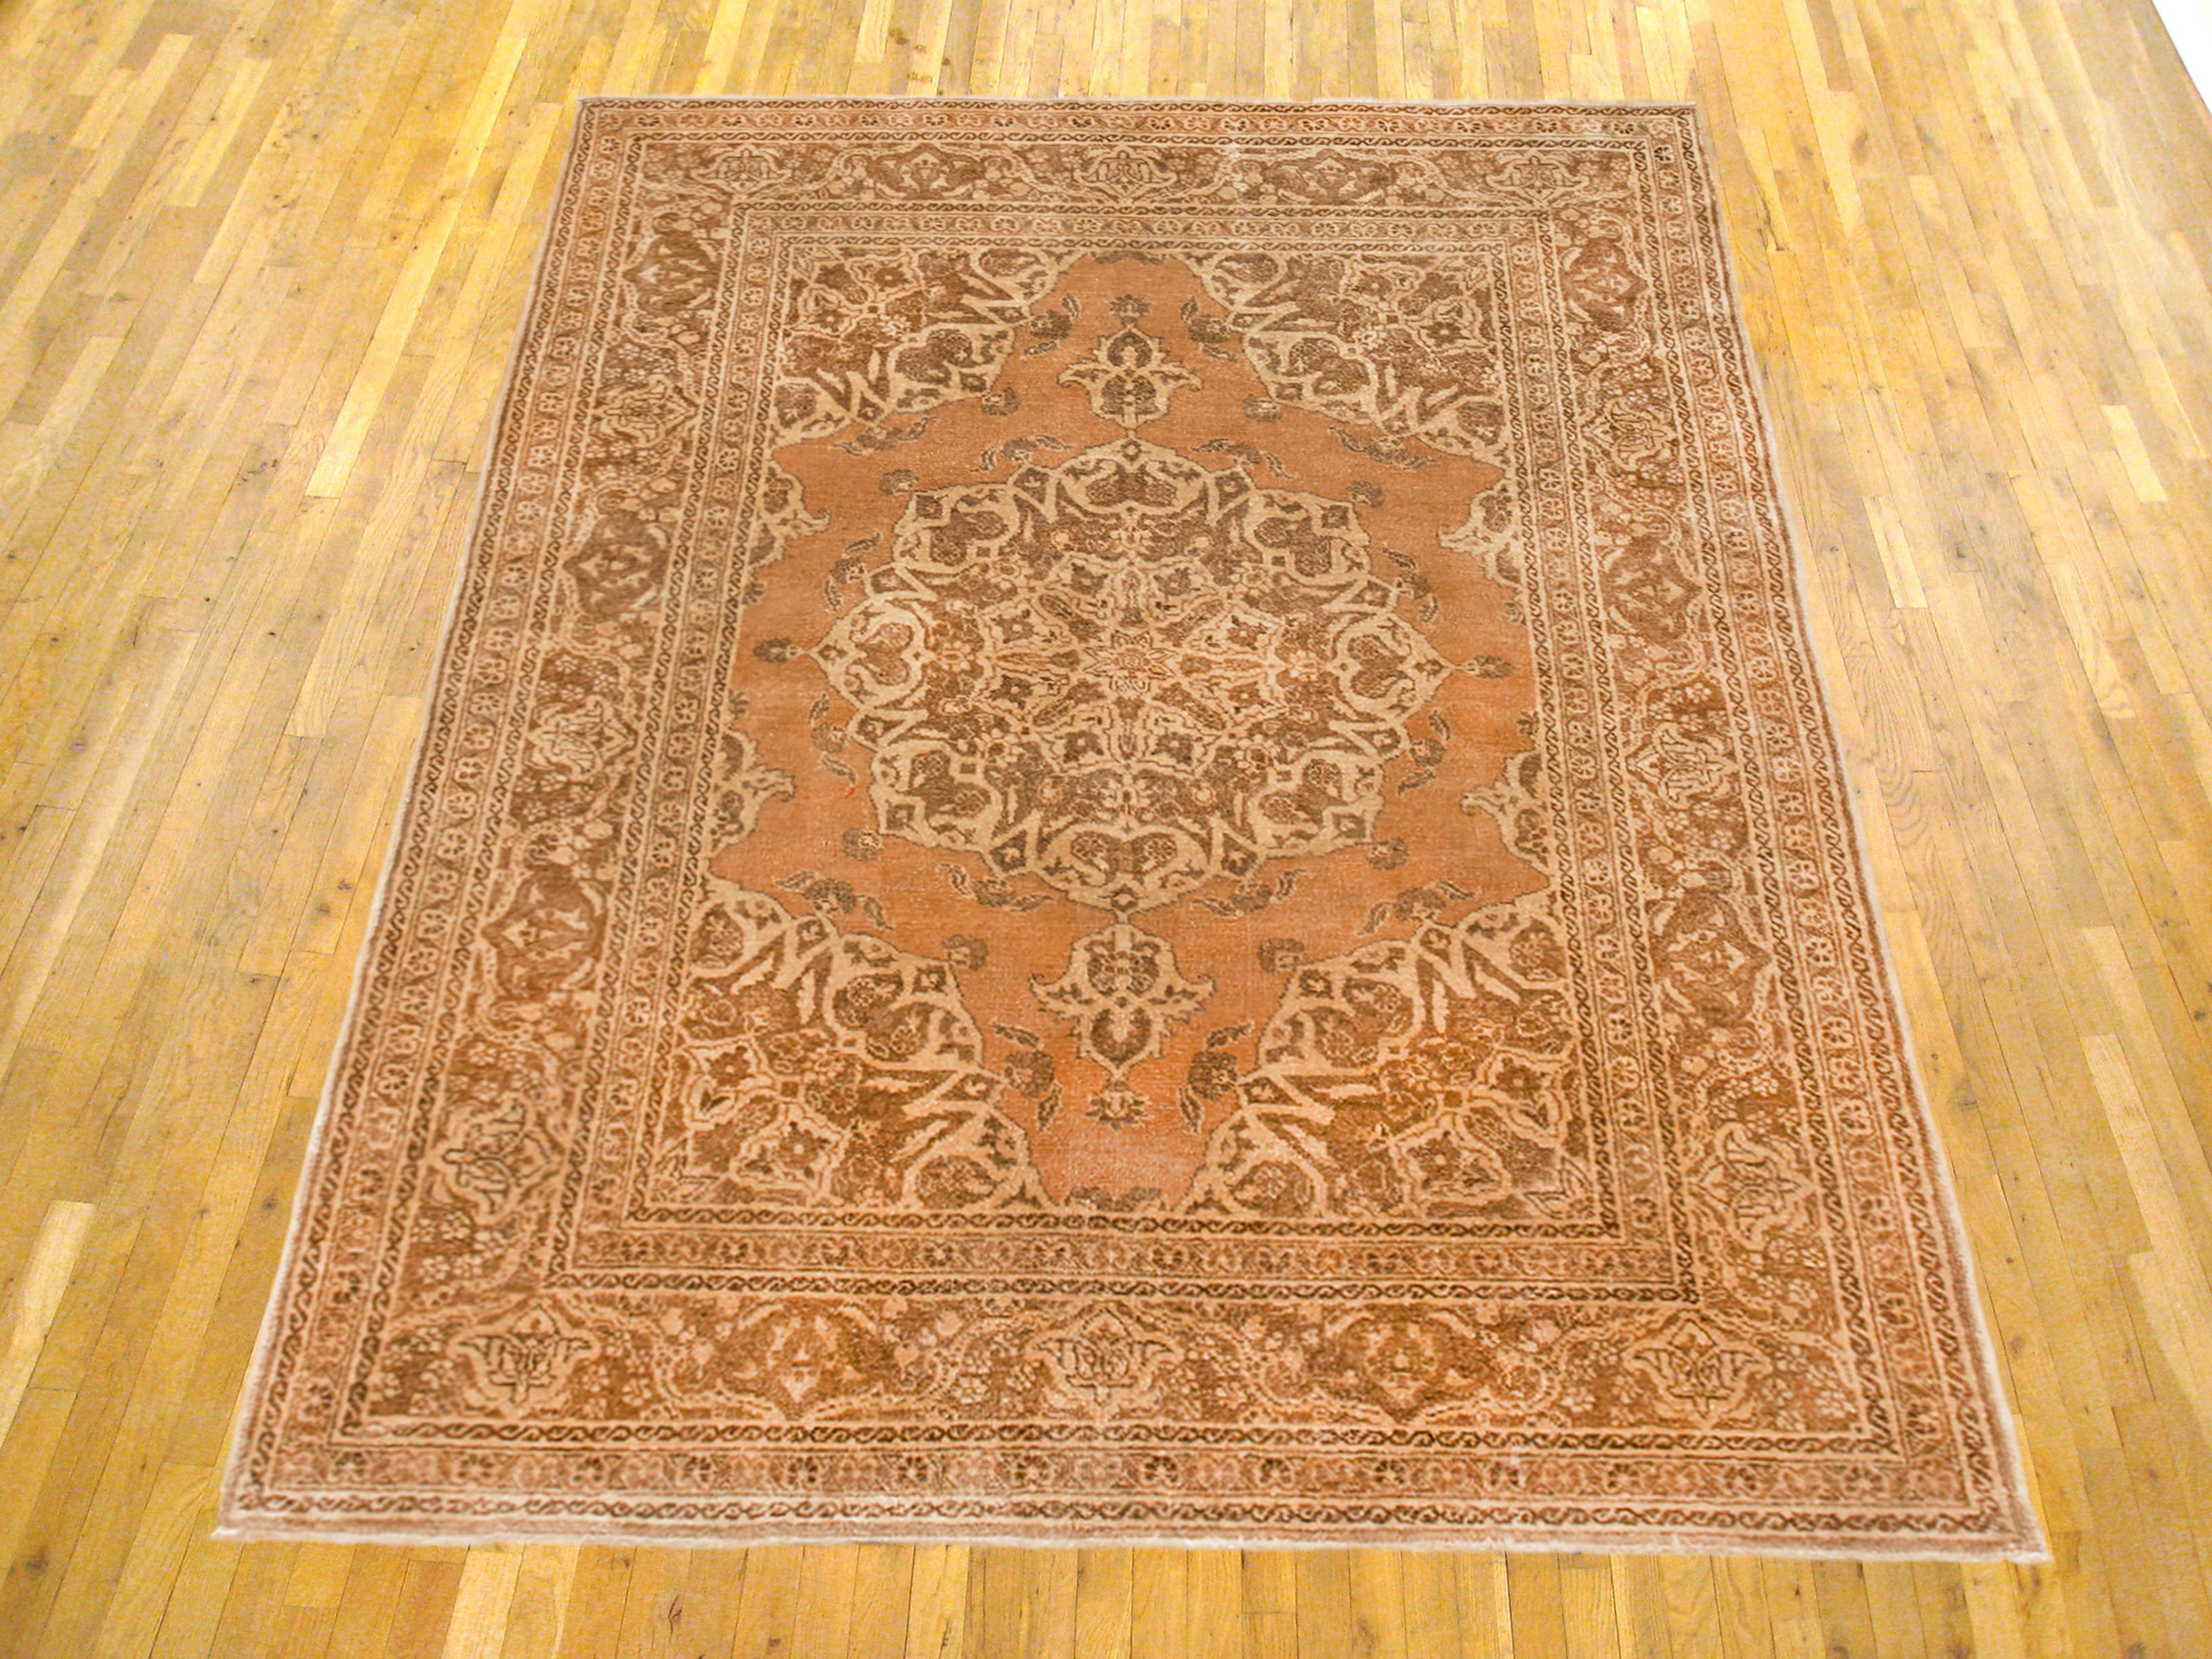 Antique Perisan Tabriz oriental carpet, circa 1900, small Sized

An antique Persian Tabriz oriental carpet, circa 1900. Size: 5'7